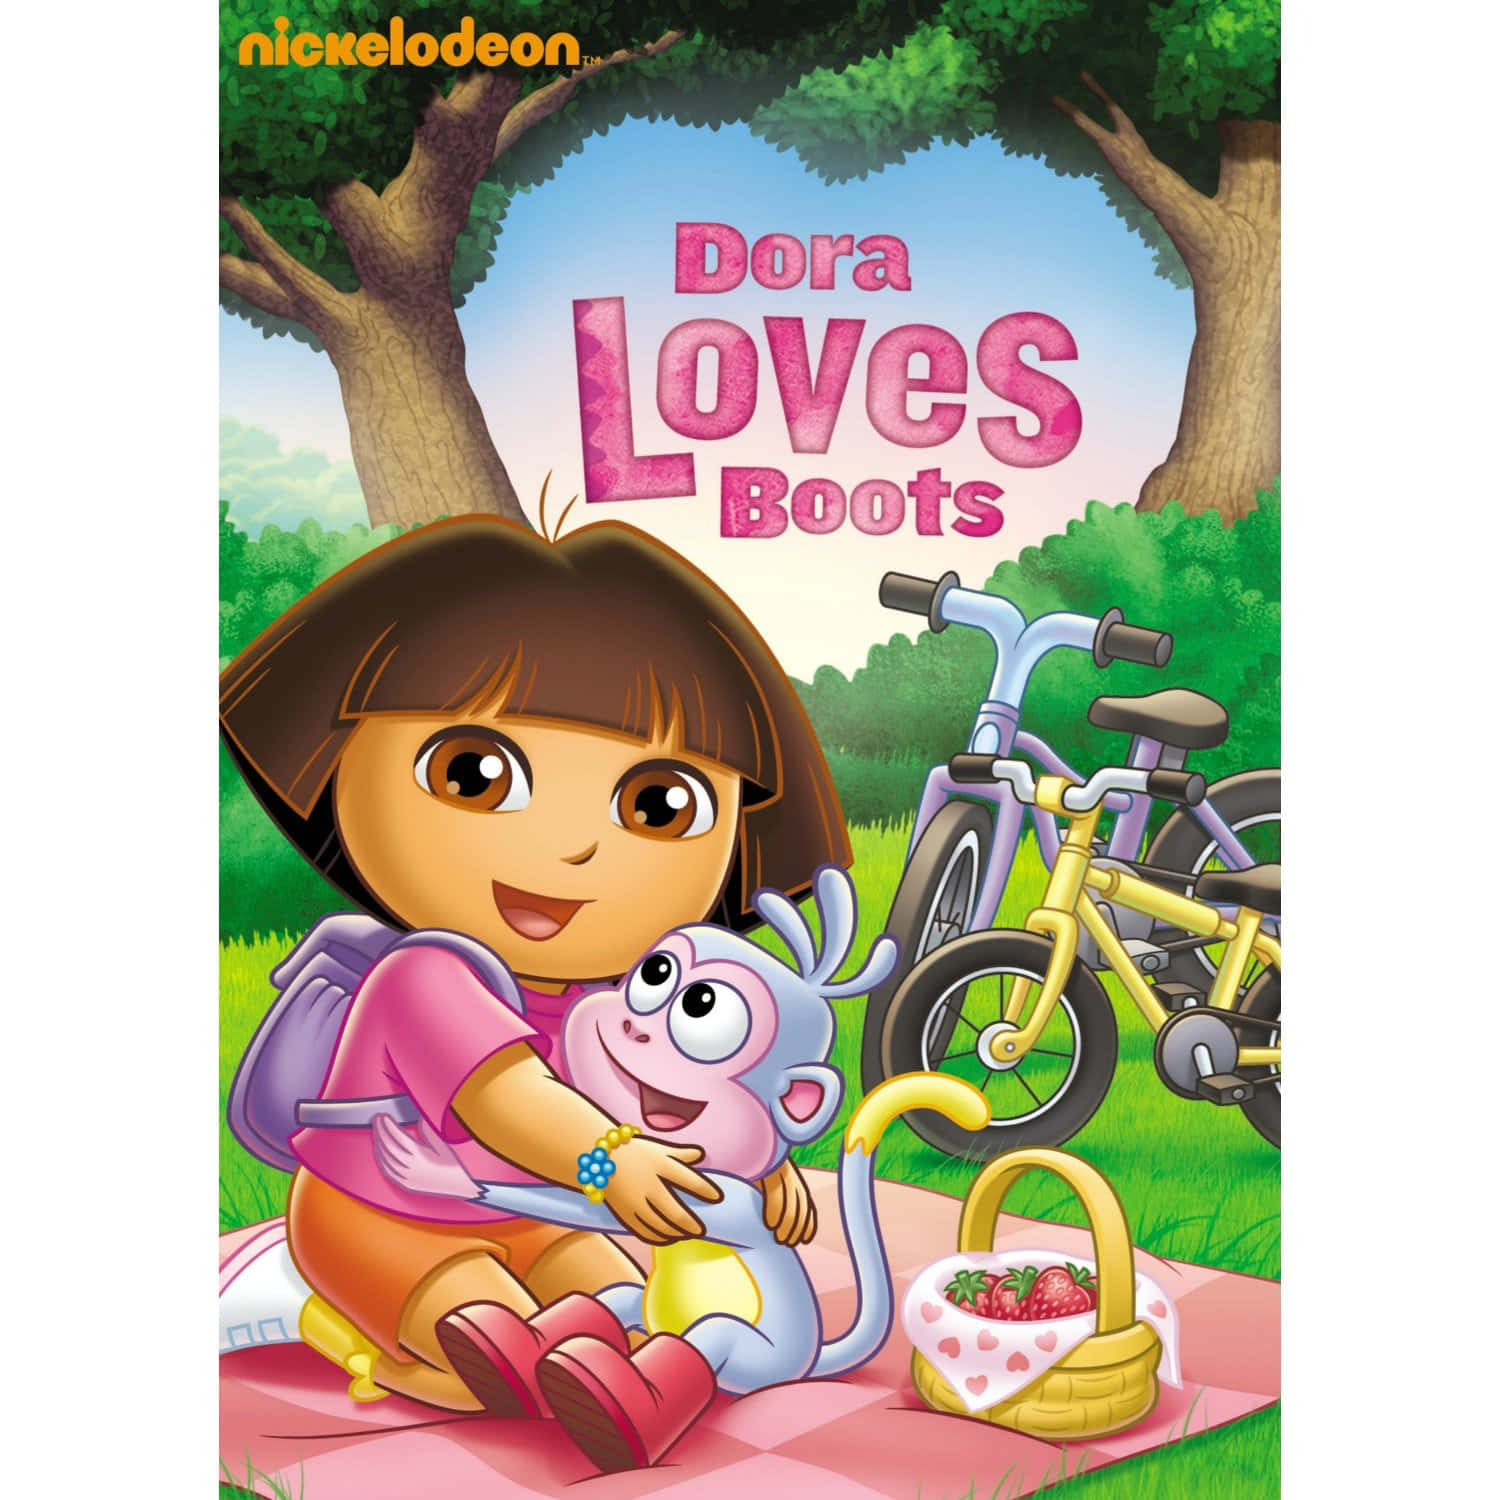 Dora adventures through various activities